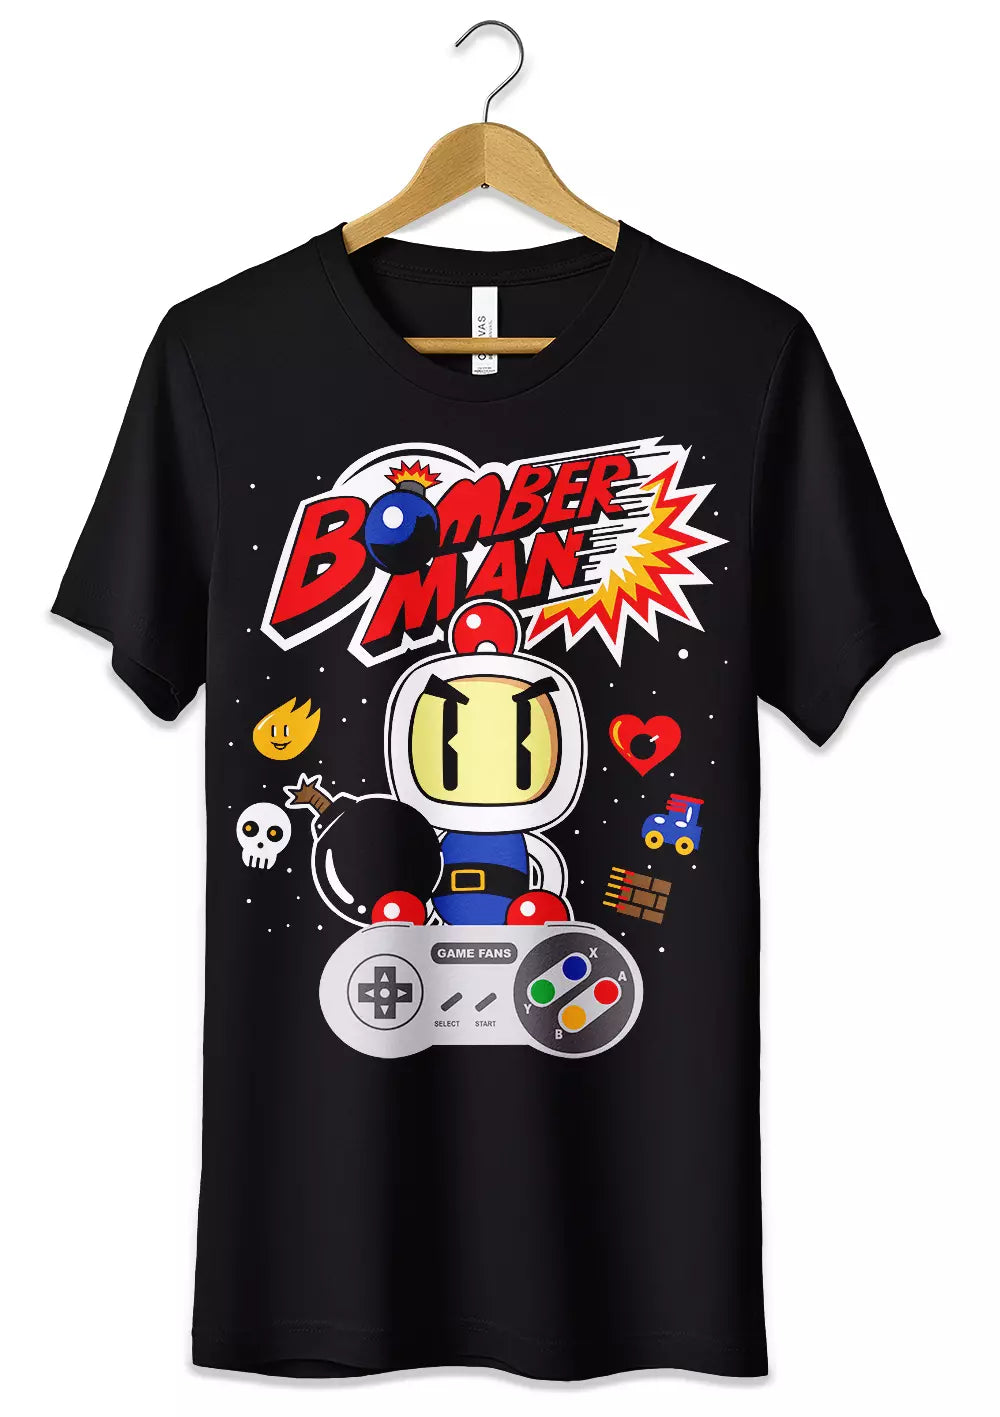 T-Shirt Maglietta Videogames Bomber Man, CmrDesignStore, T-Shirt, t-shirt-maglietta-videogames-bomber-man, CmrDesignStore